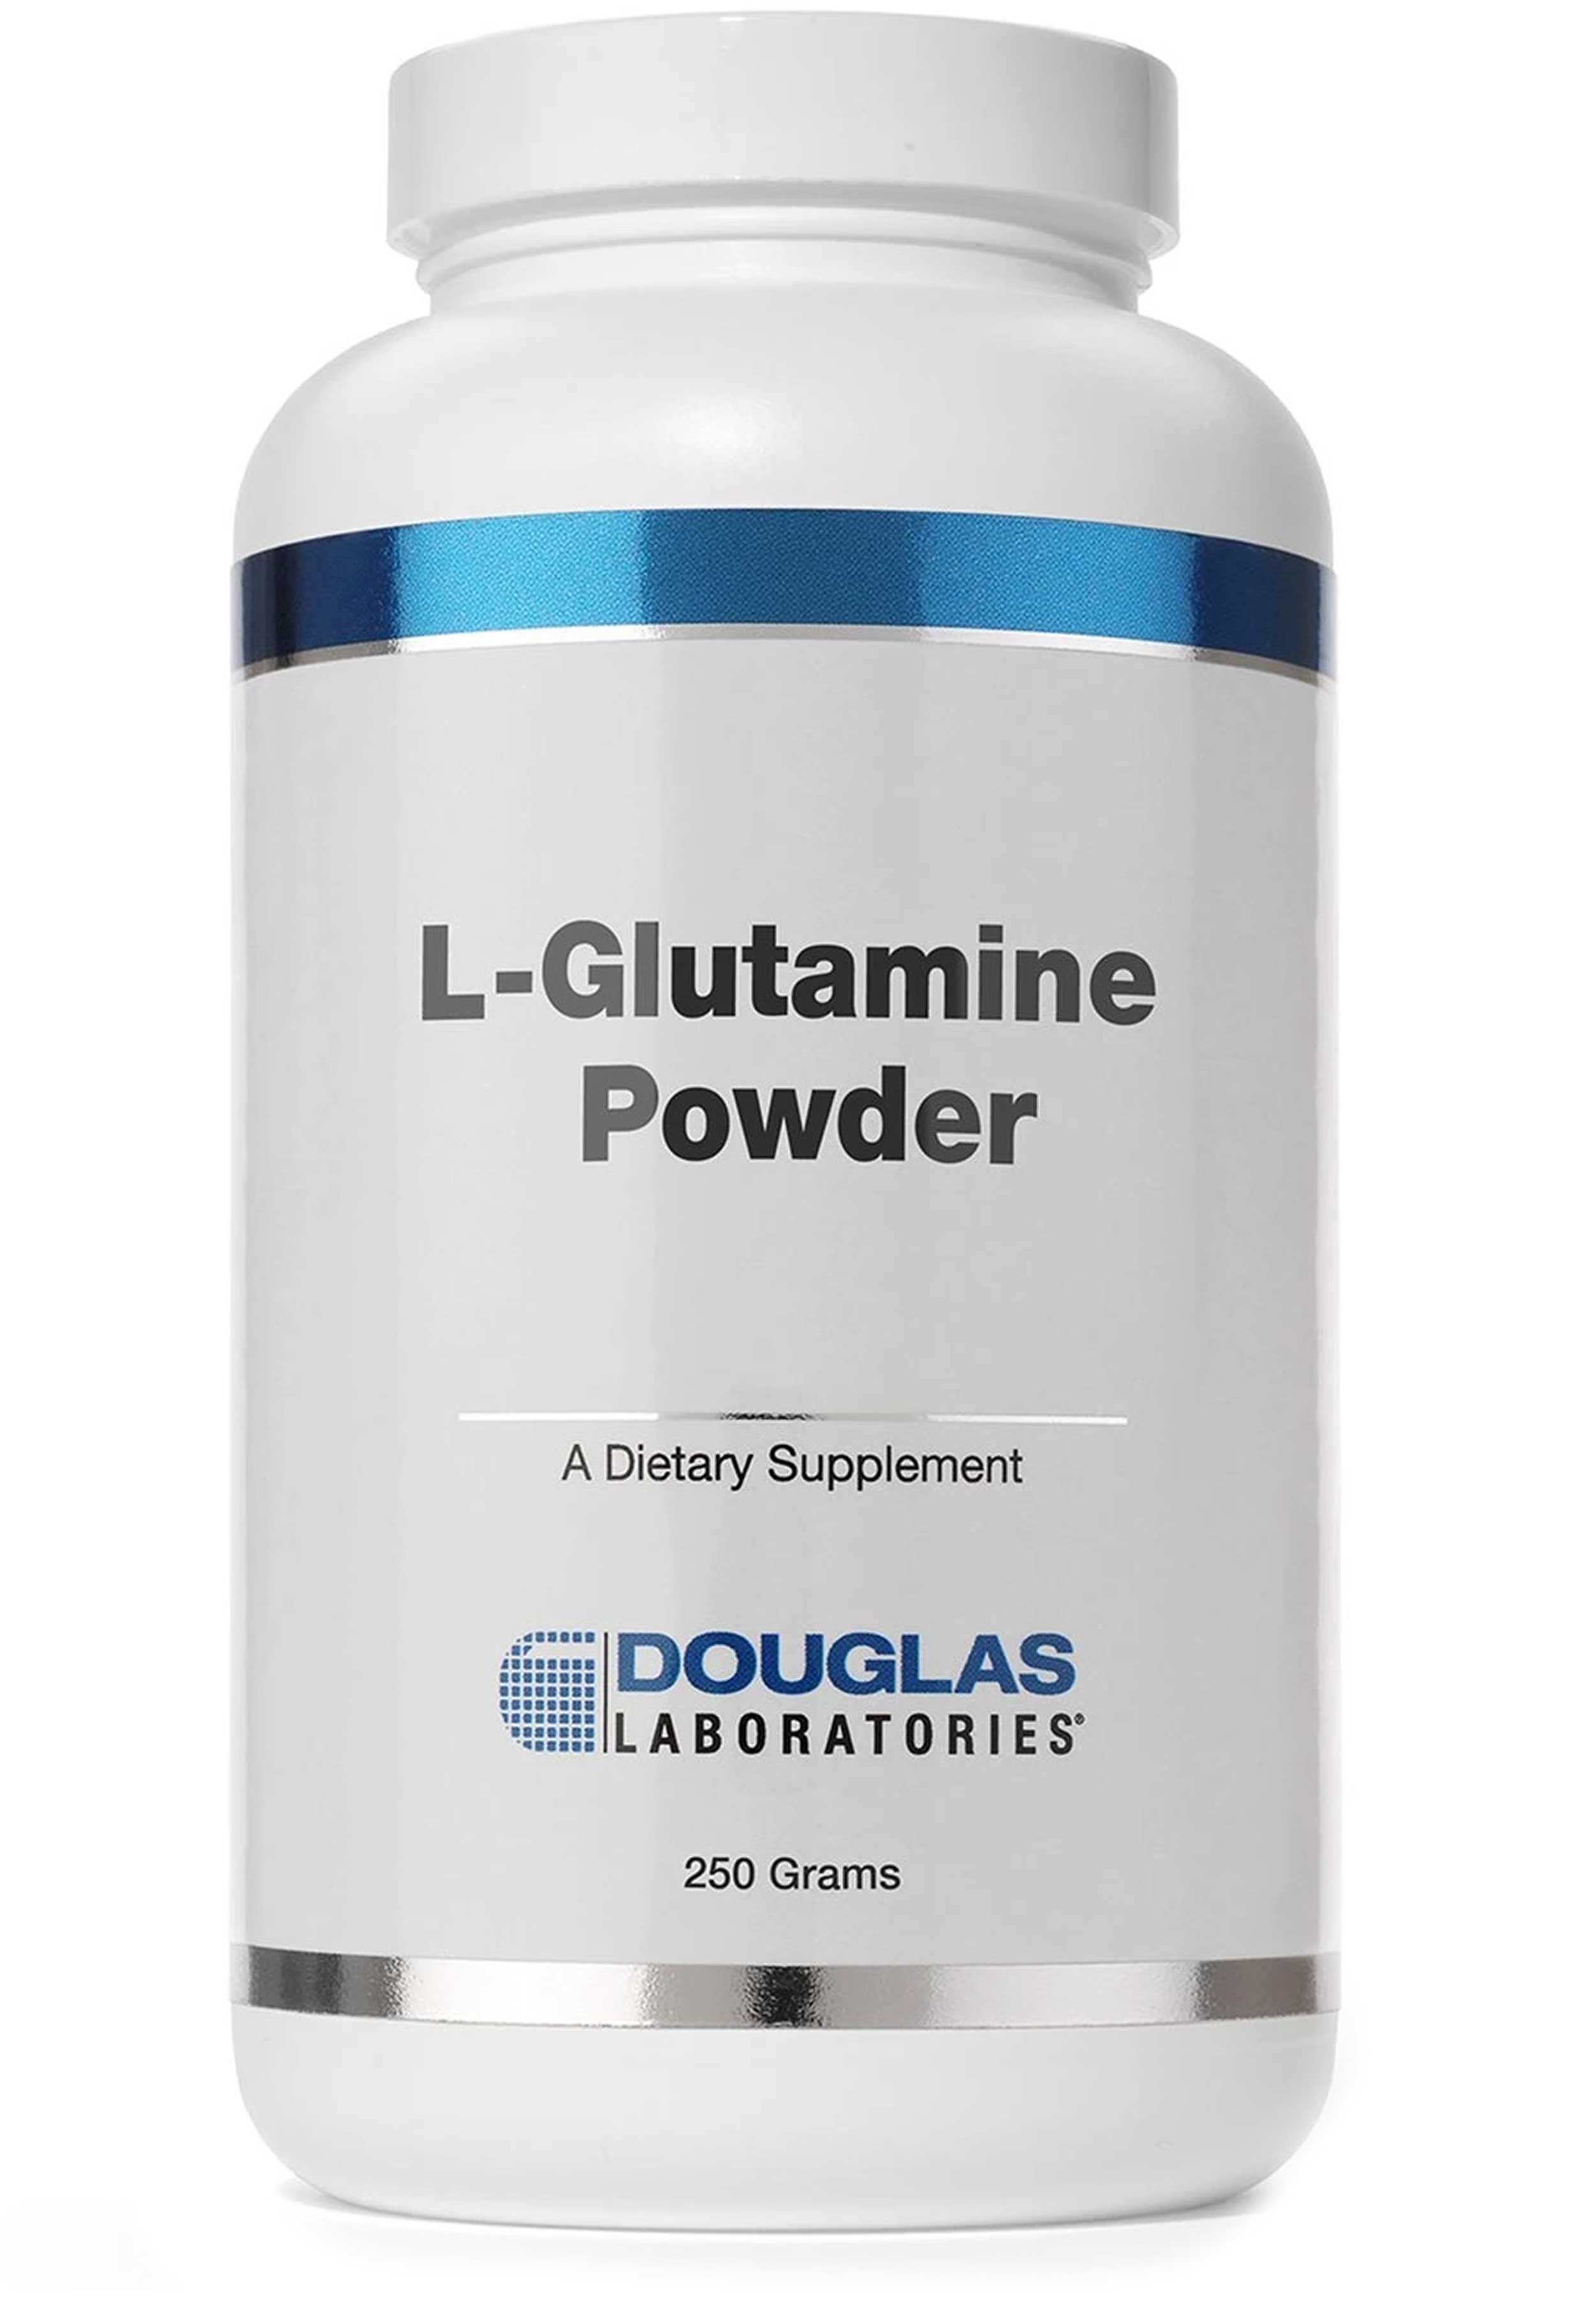 Douglas Laboratories L-Glutamine Powder